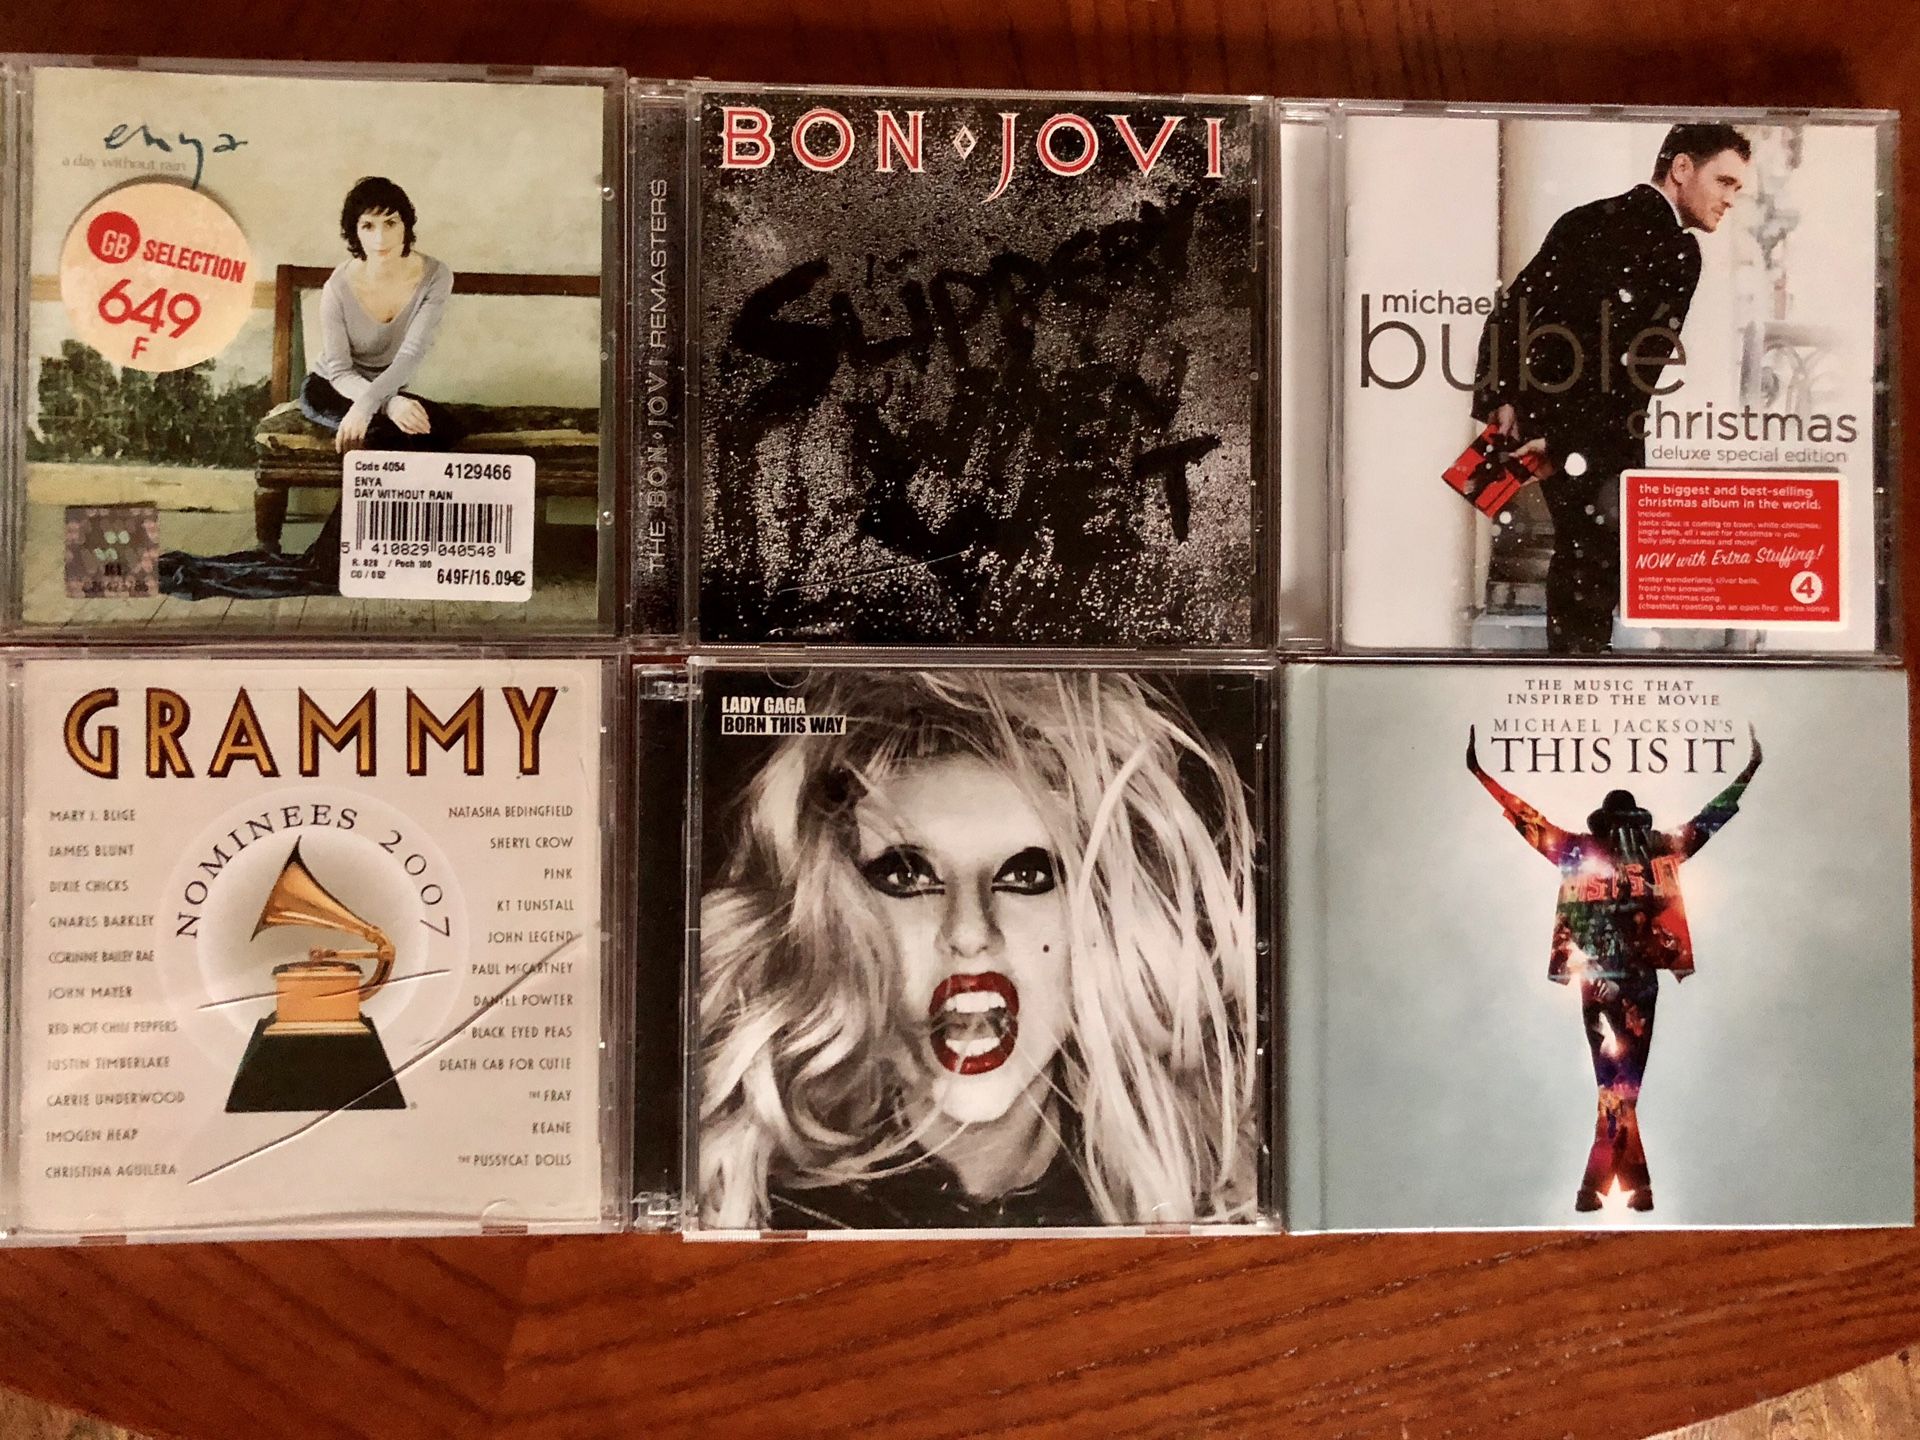 All 6 cds - Lady Gaga, Michael Jackson, Bon Jovi, Michael Bible, Enya and Grammy